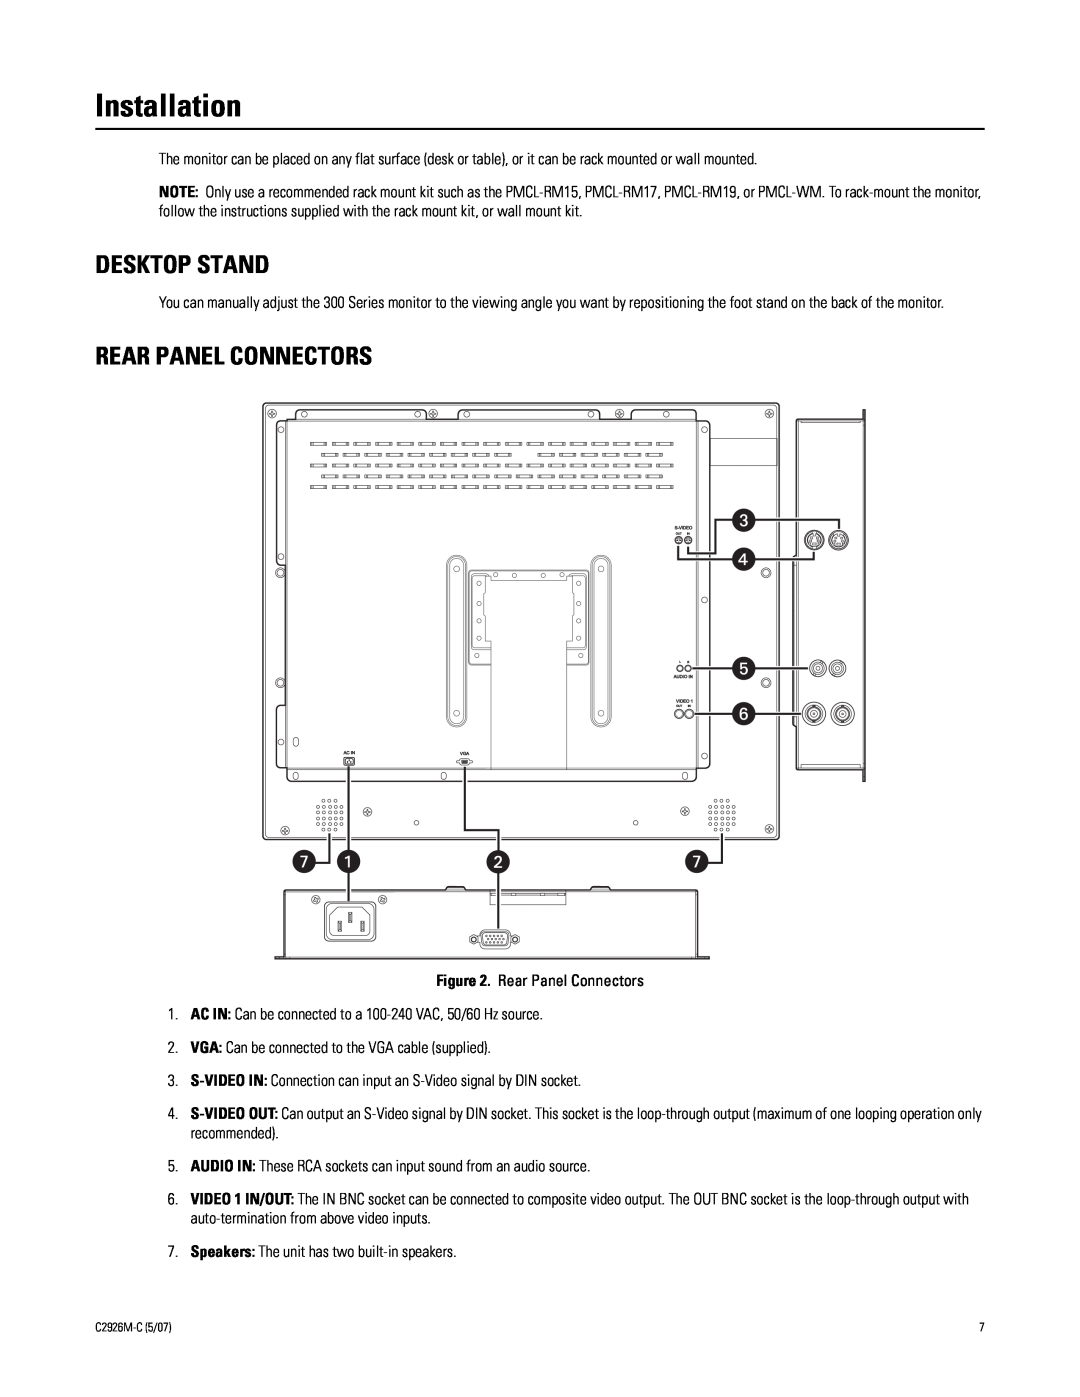 Pelco 300 manual Installation, Desktop Stand, Rear Panel Connectors 